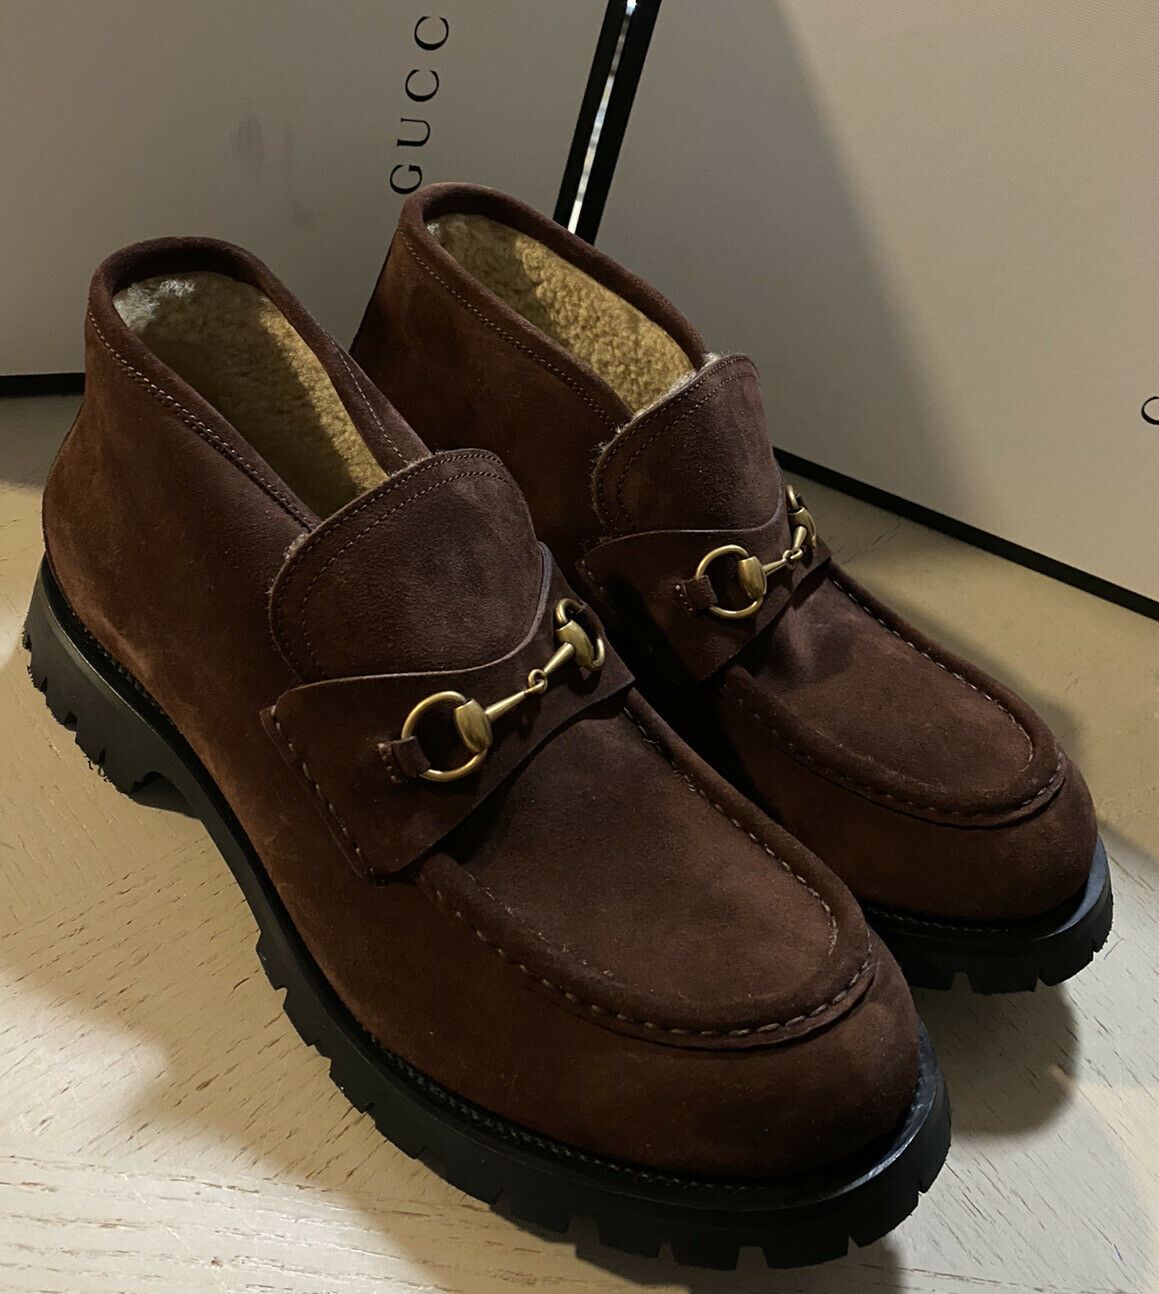 NIB $1400 Gucci Men’s Suede Ankle Boots Shoes DK Brown 15 US / 14 UK 575126